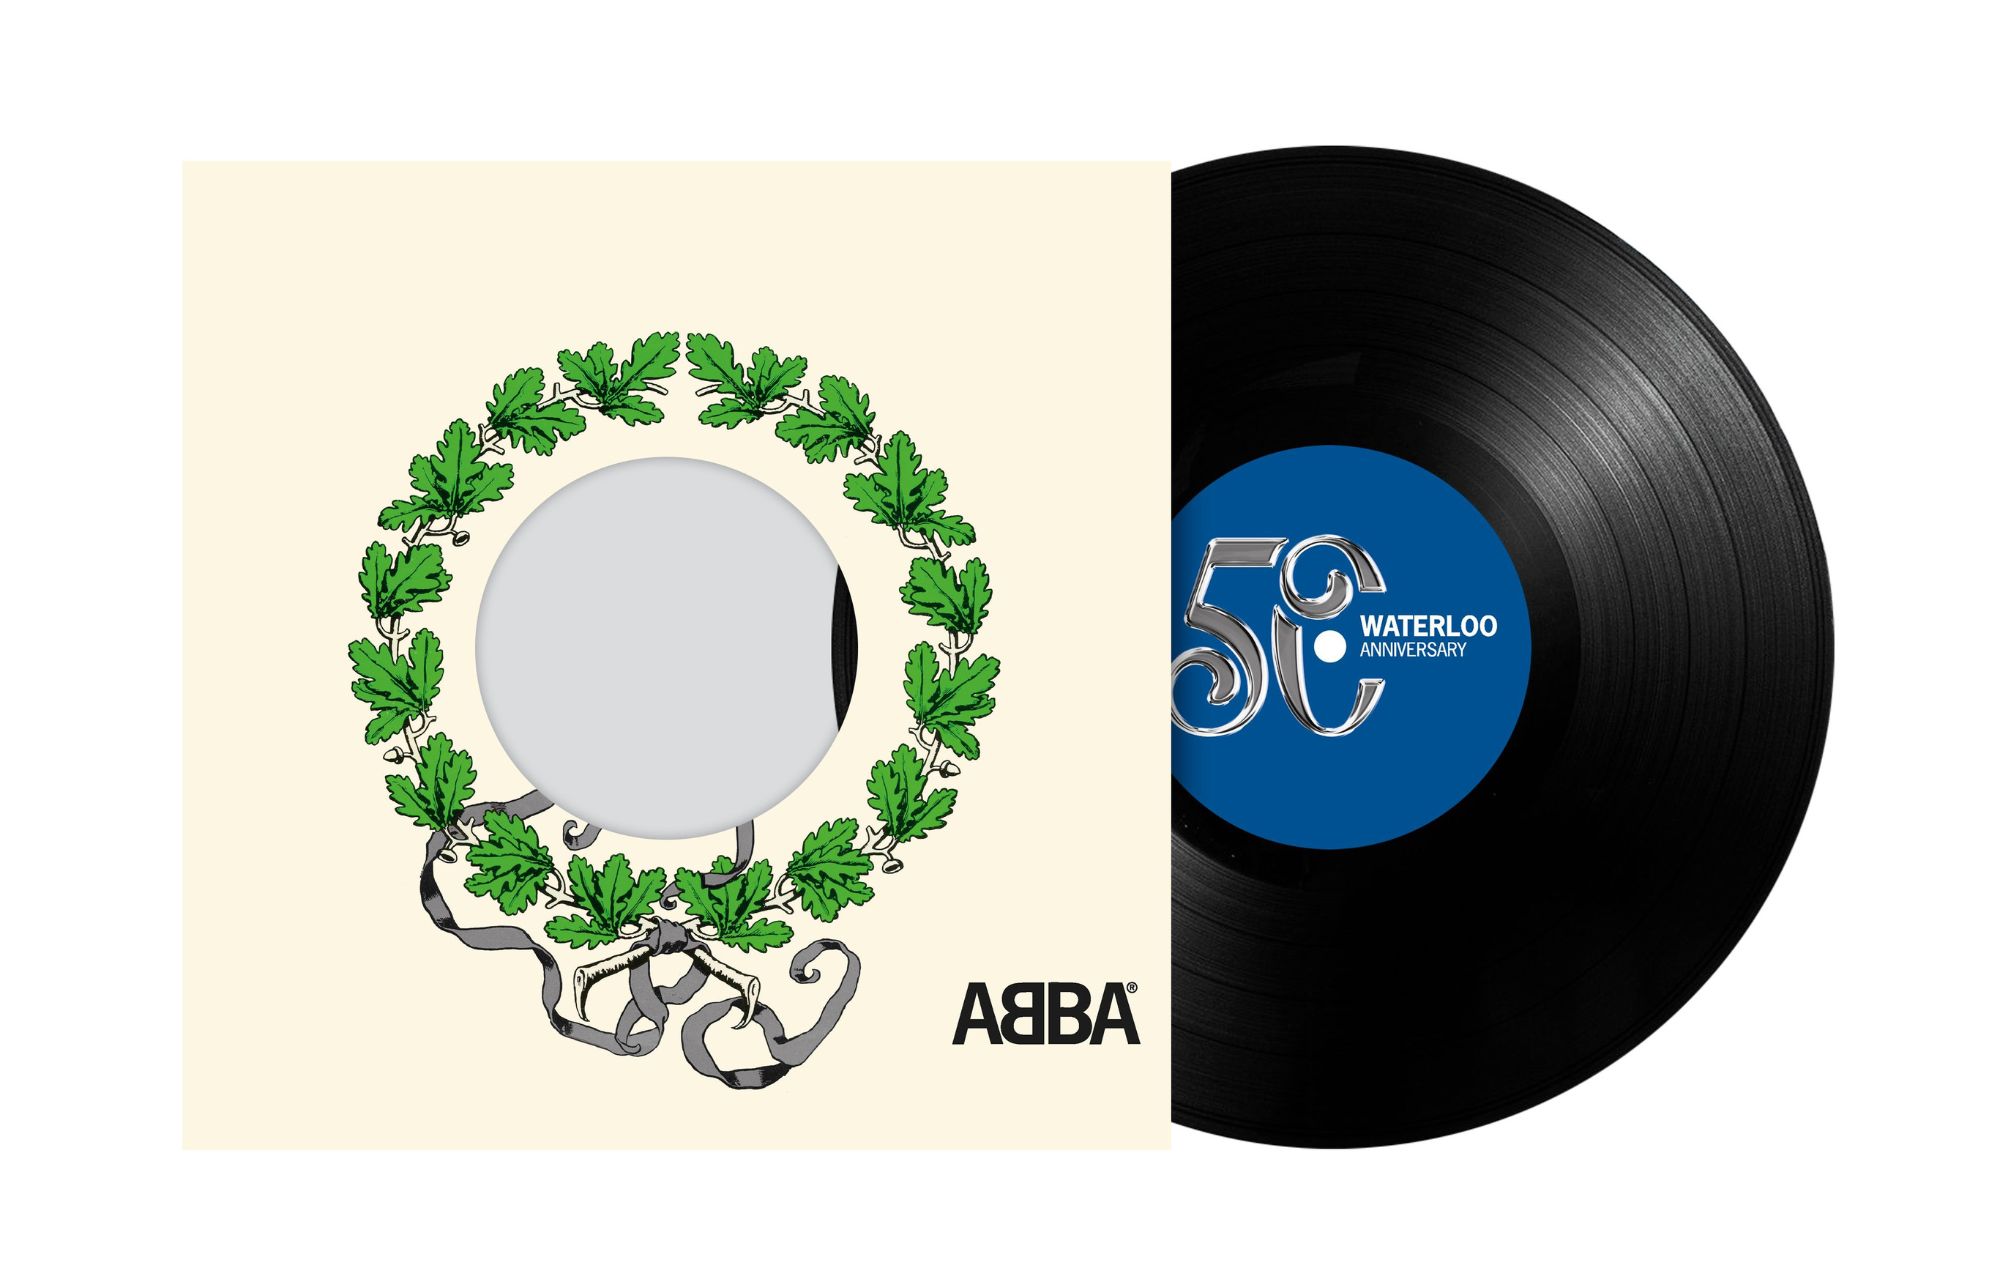 ABBA 50th Anniversary 'Waterloo' vinyl reissue